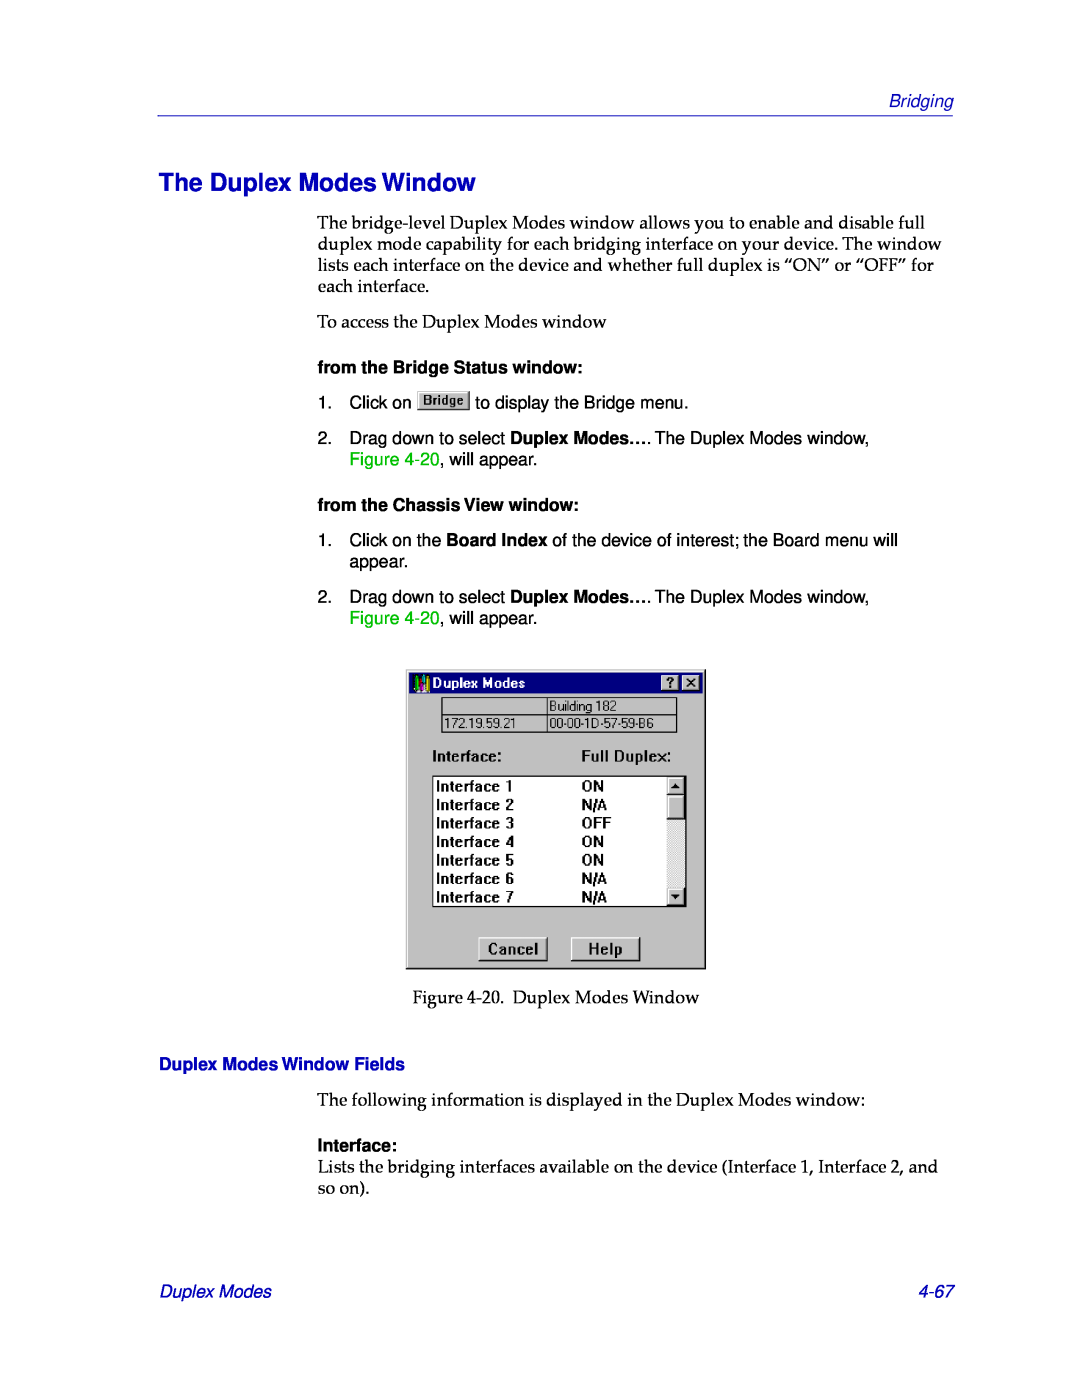 Cabletron Systems CSX200, CSX400 manual The Duplex Modes Window, Duplex Modes Window Fields, Interface, 4-67, Bridging 